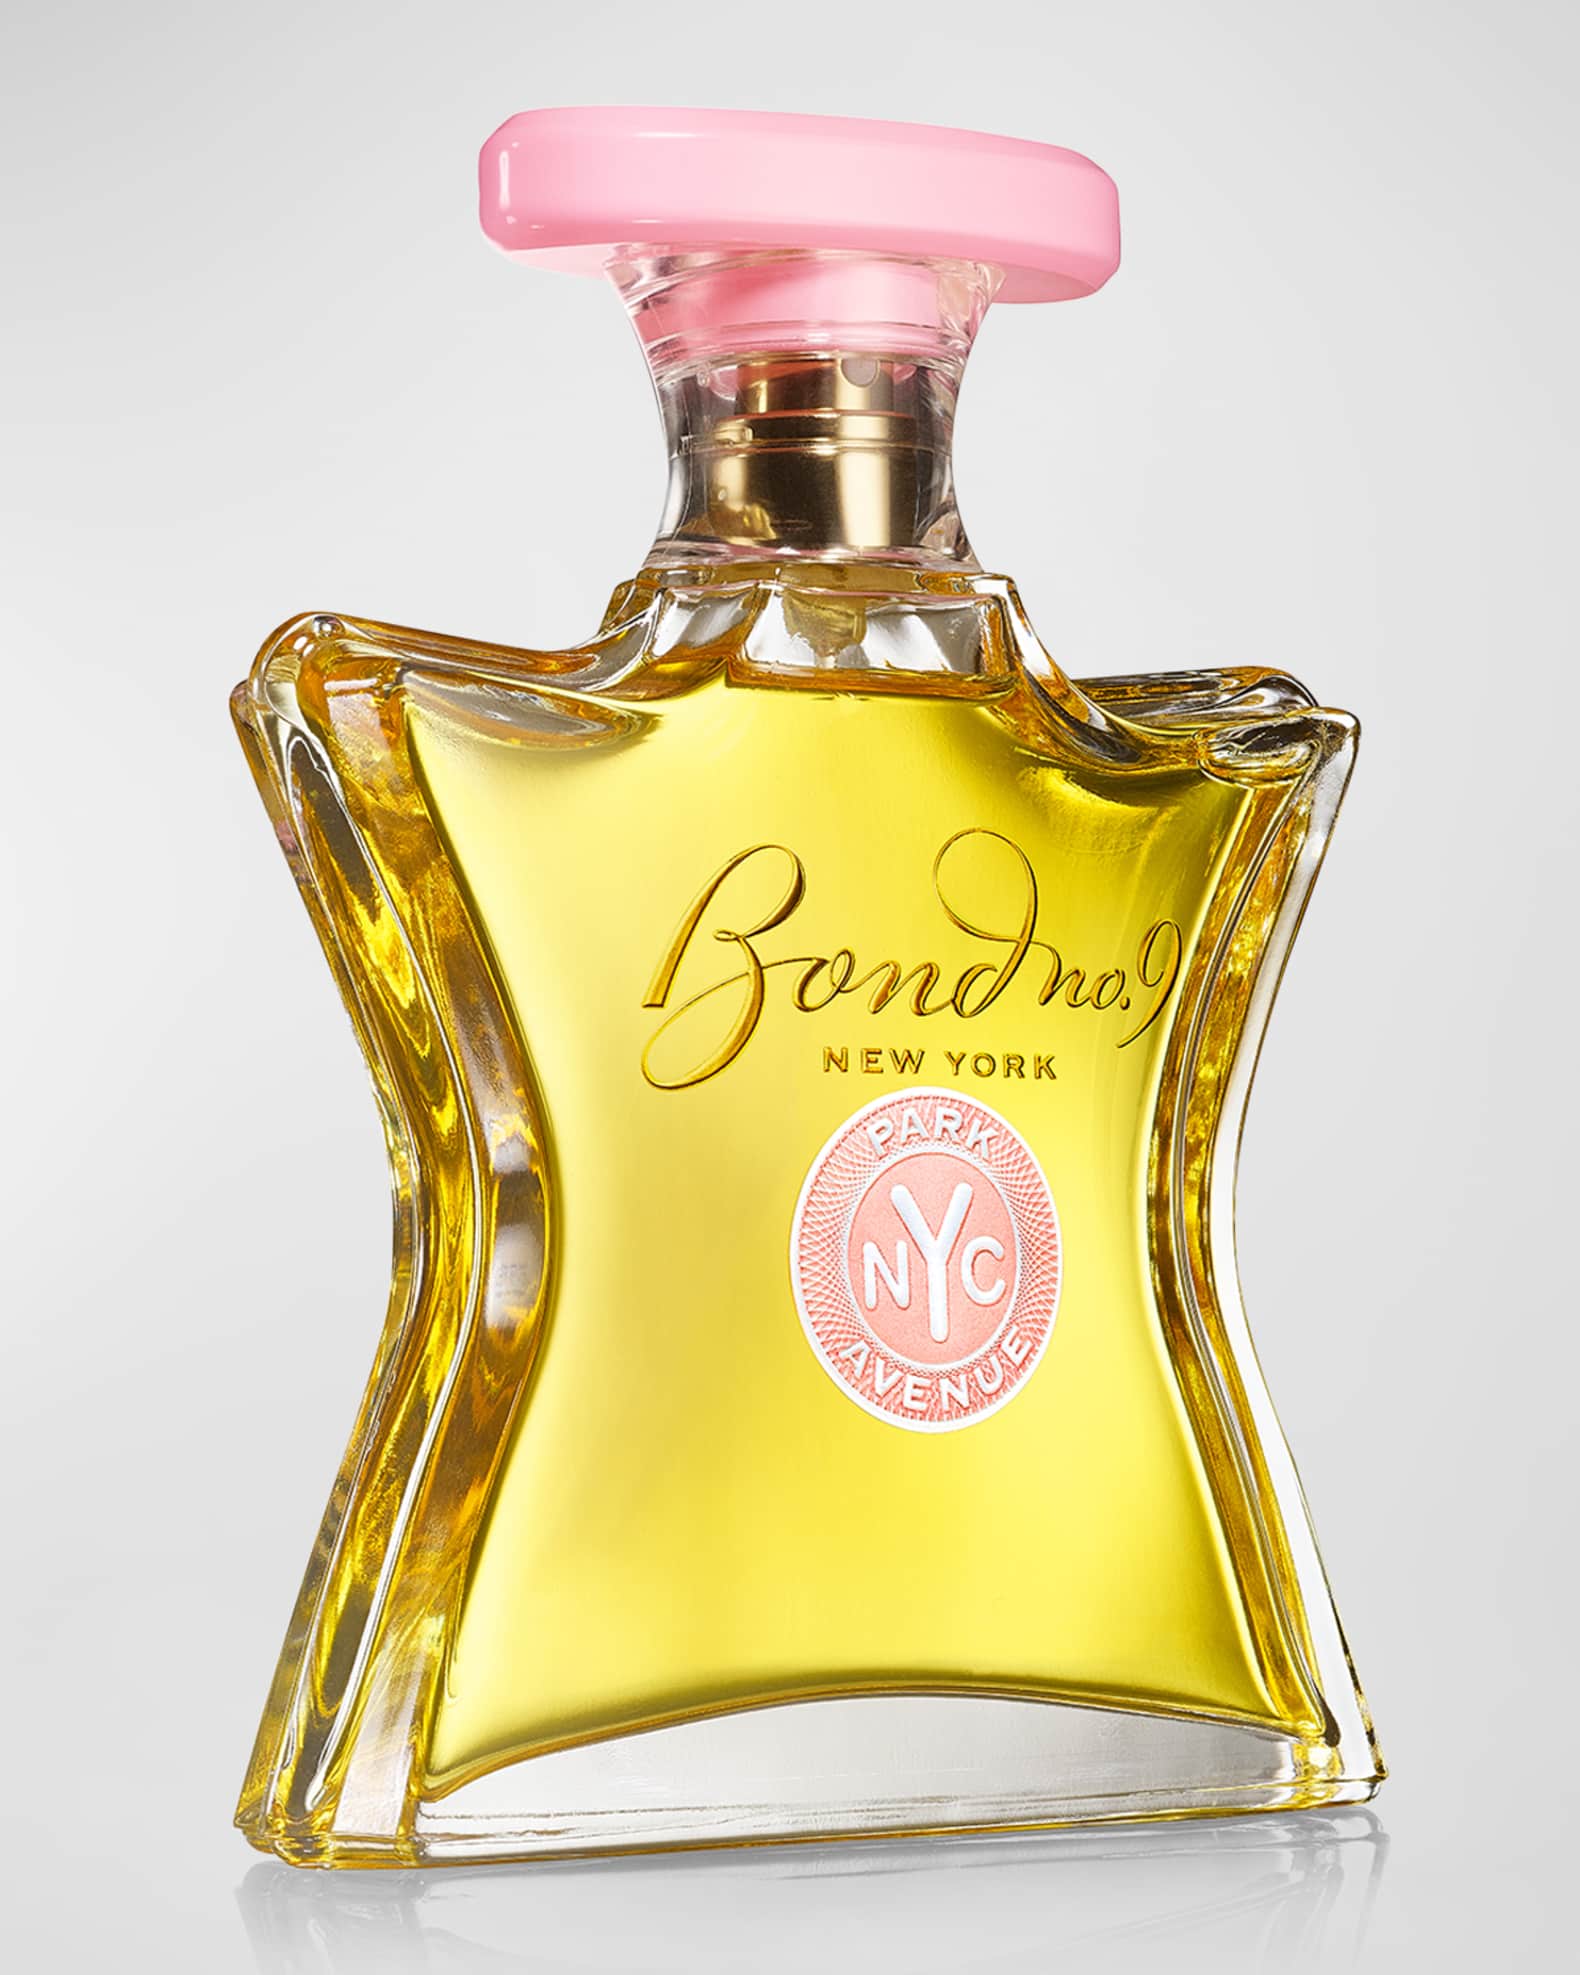 Bond No.9 New York Park Avenue Eau de Parfum, 3.4 oz. | Neiman Marcus